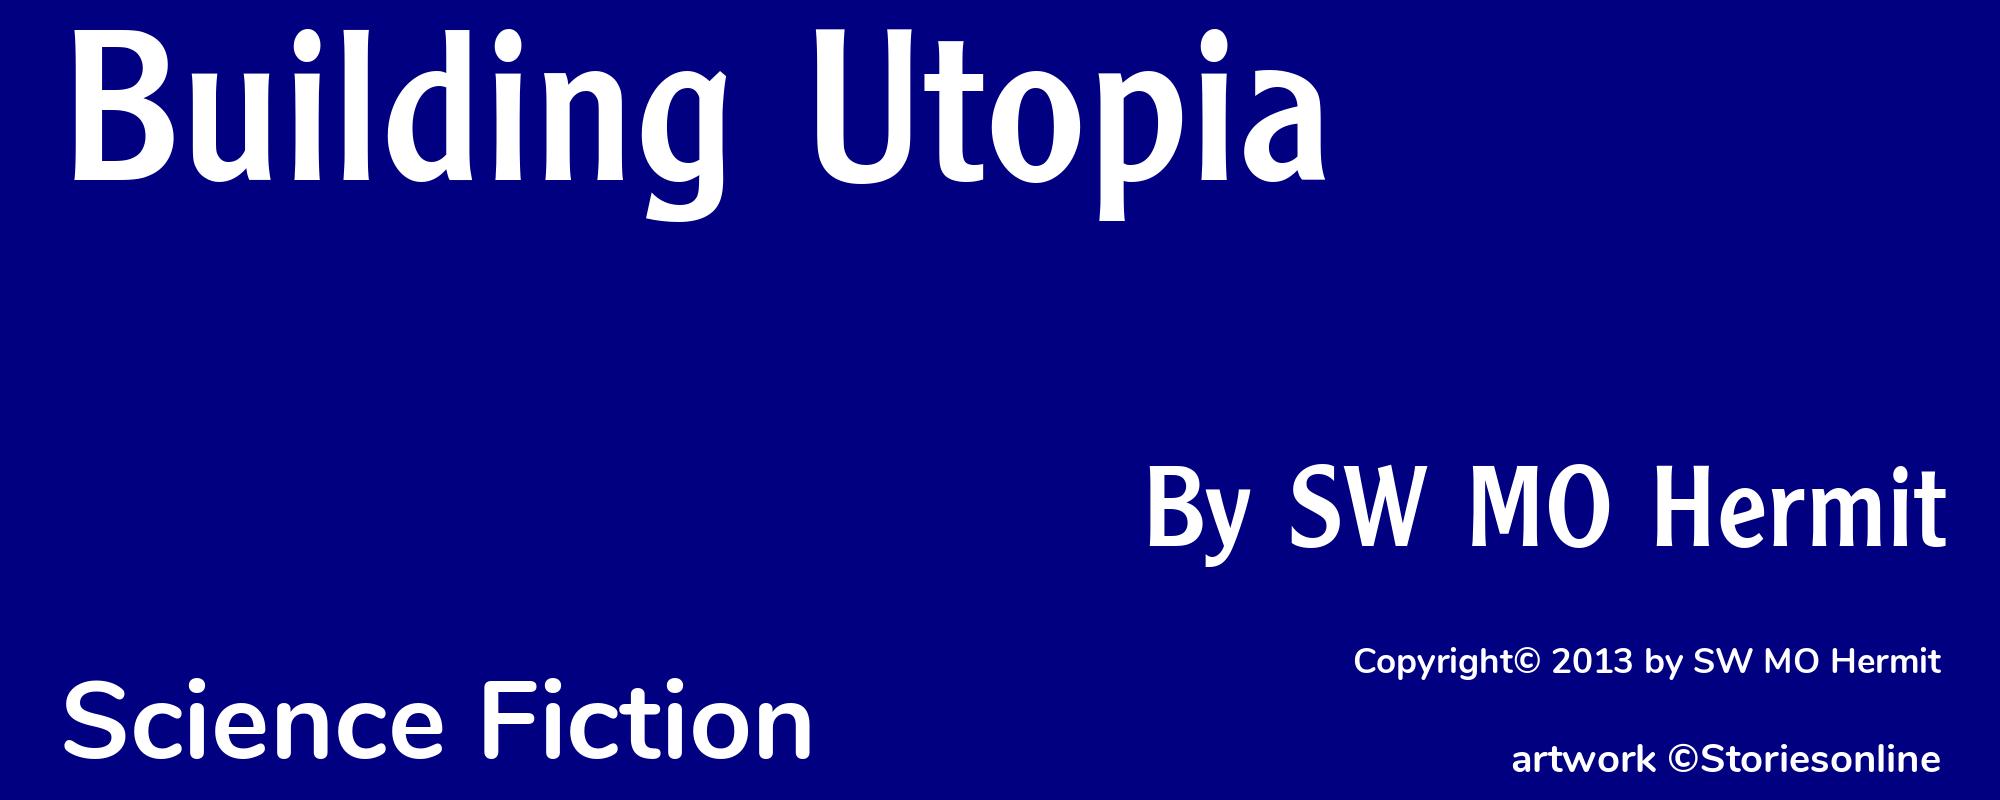 Building Utopia - Cover